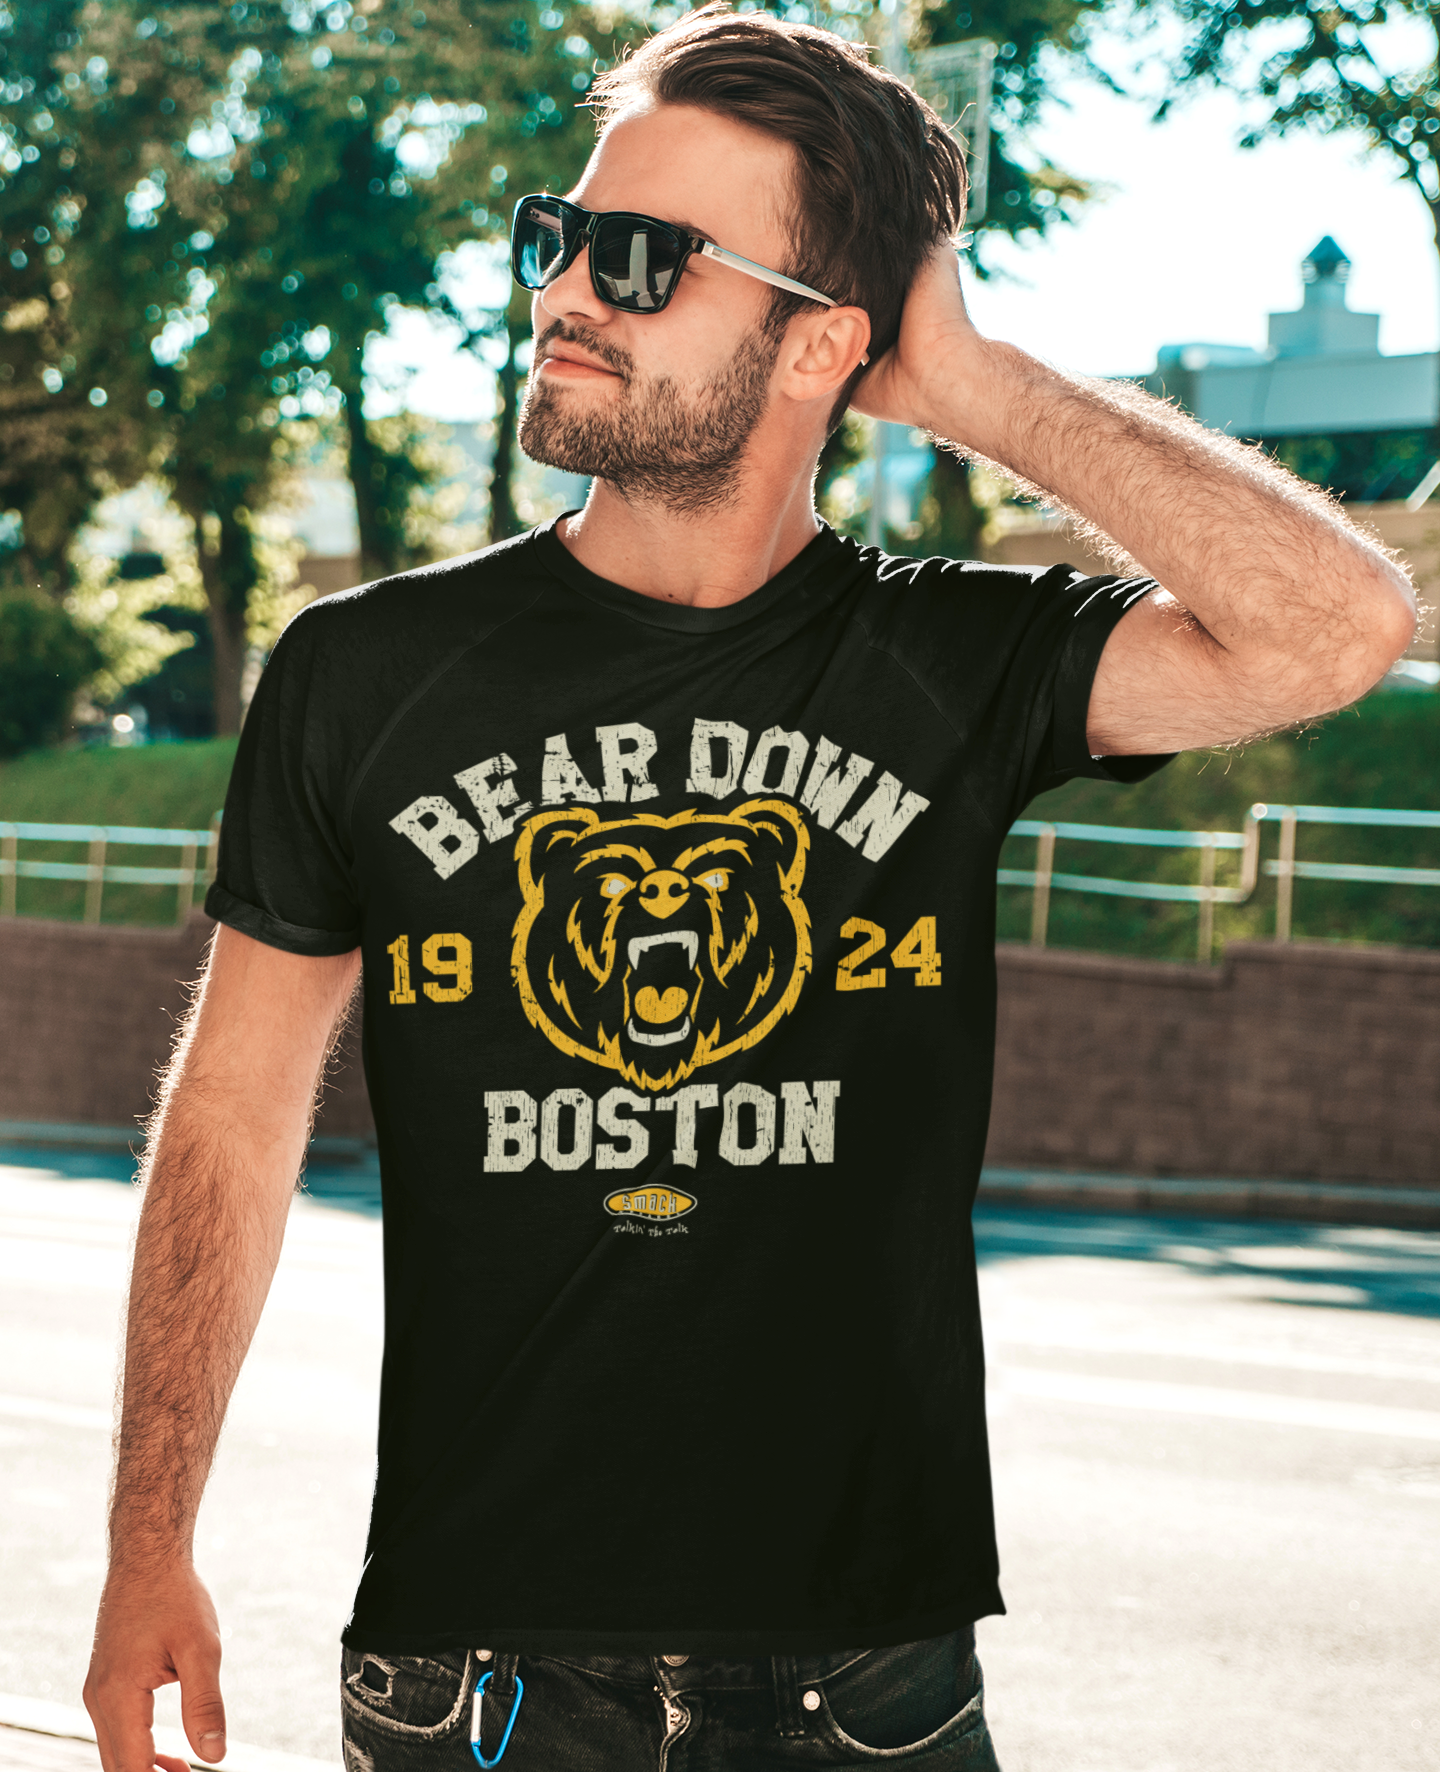 Boston Bruins T-Shirts in Boston Bruins Team Shop 